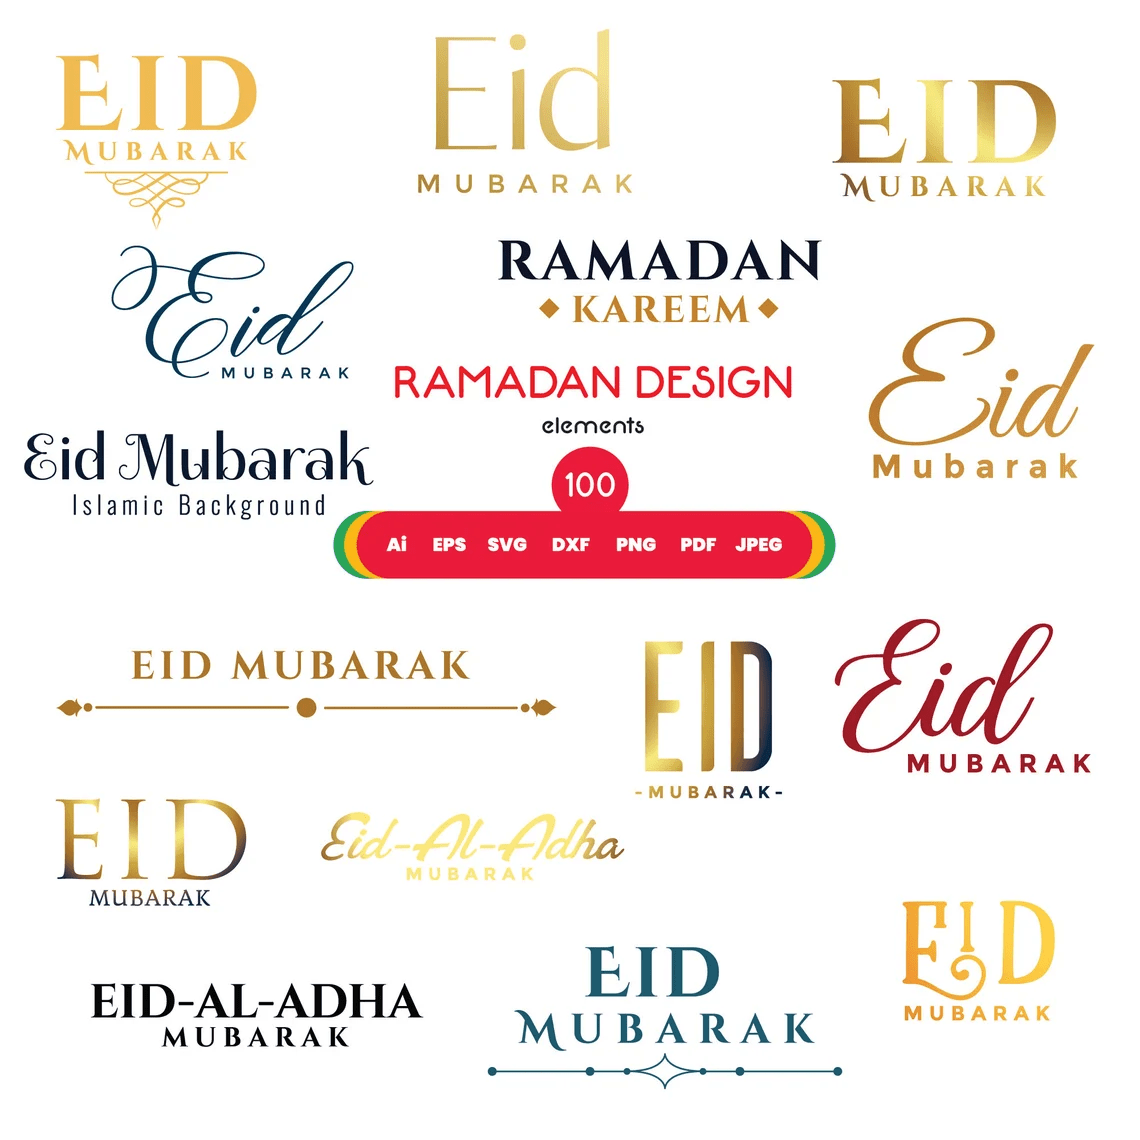 Ramadan design for everyone.